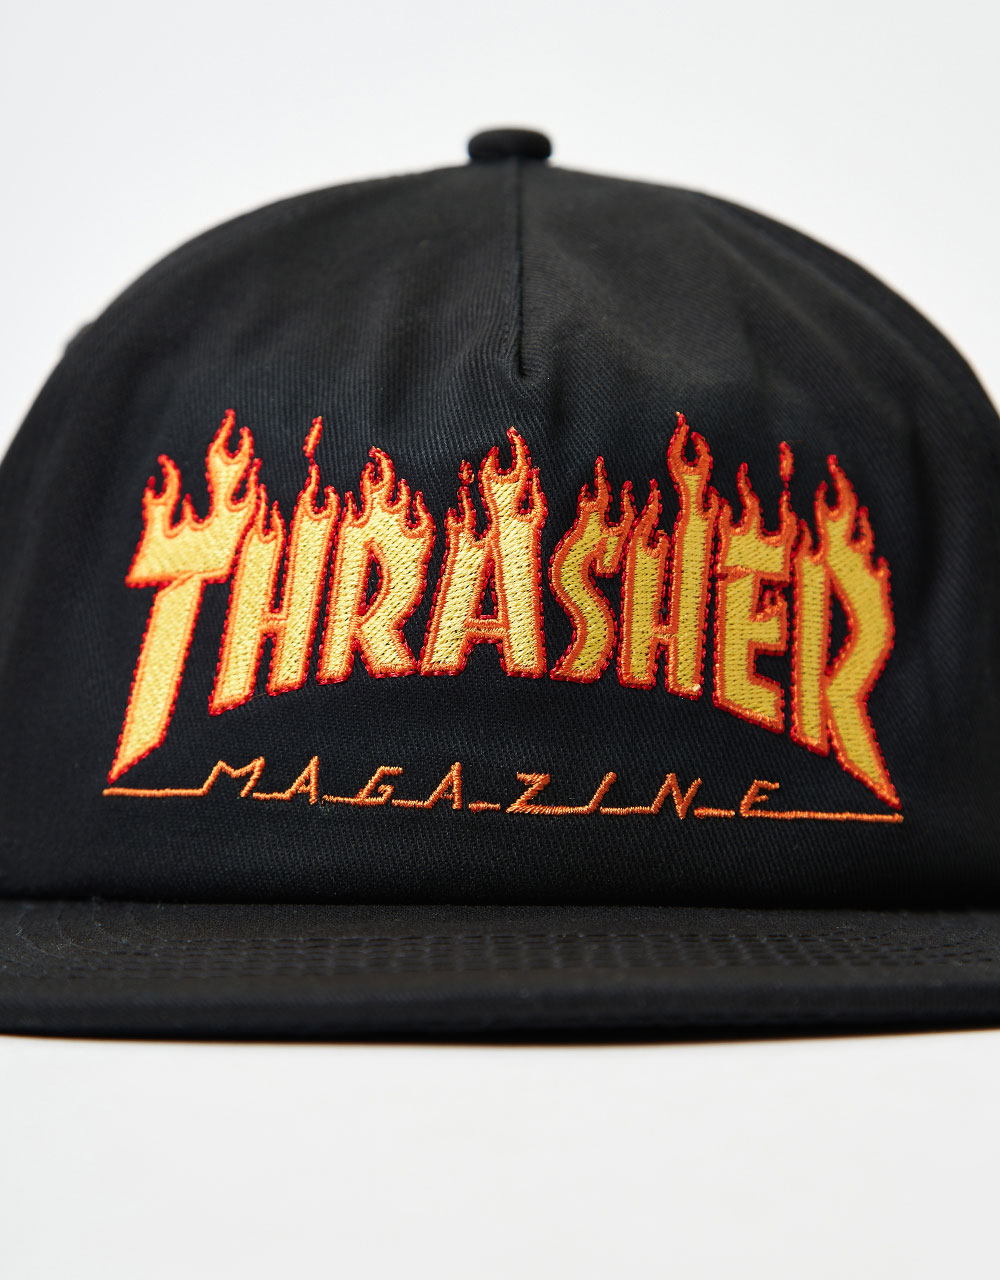 Thrasher Flame Embroidered Snapback Cap - Black